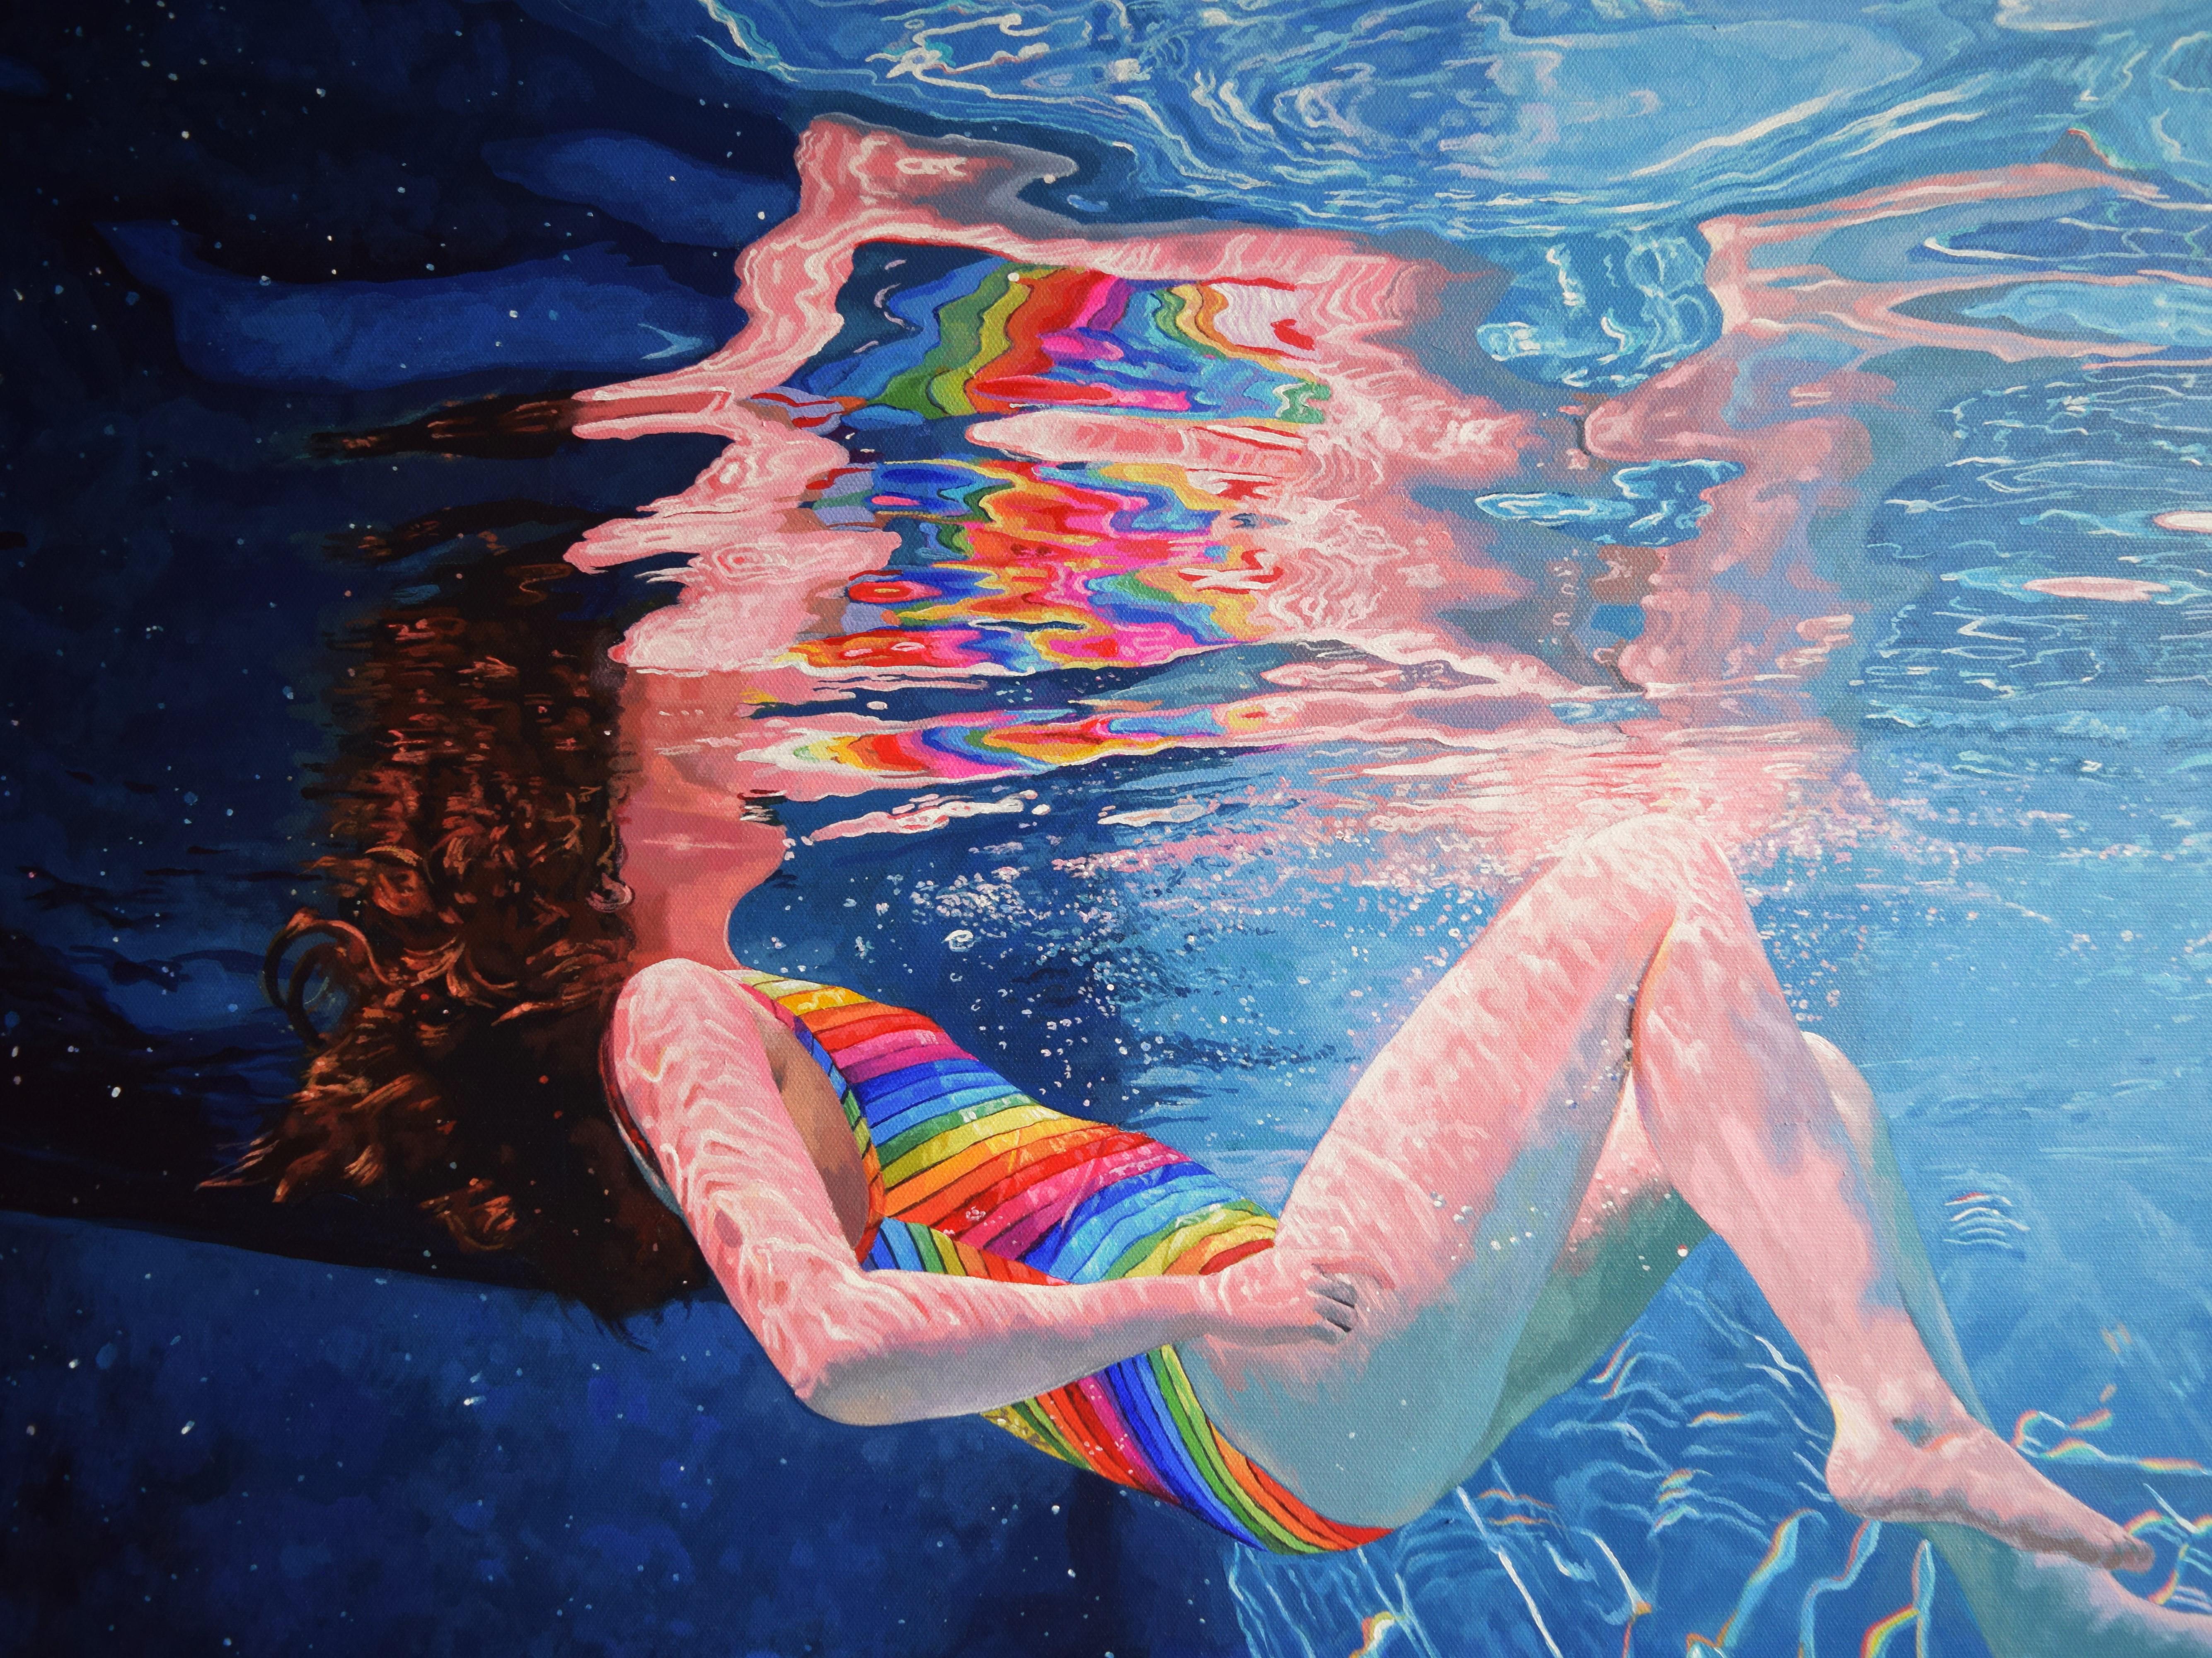 Reverie-original hyperrealistic figurative waterscape painting-contemporary art 